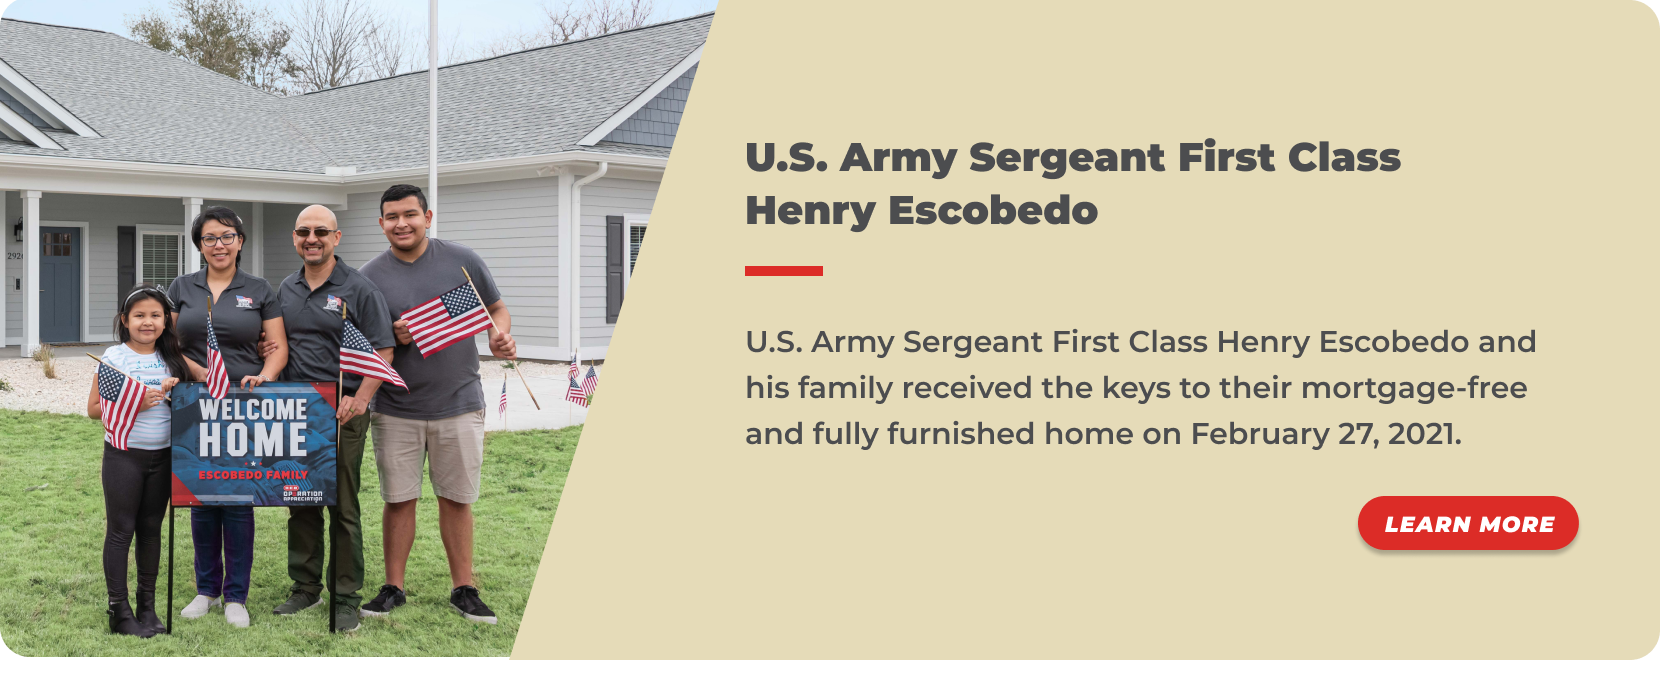 31 - U.S. Army Sergeant First Class Henry Escobedo